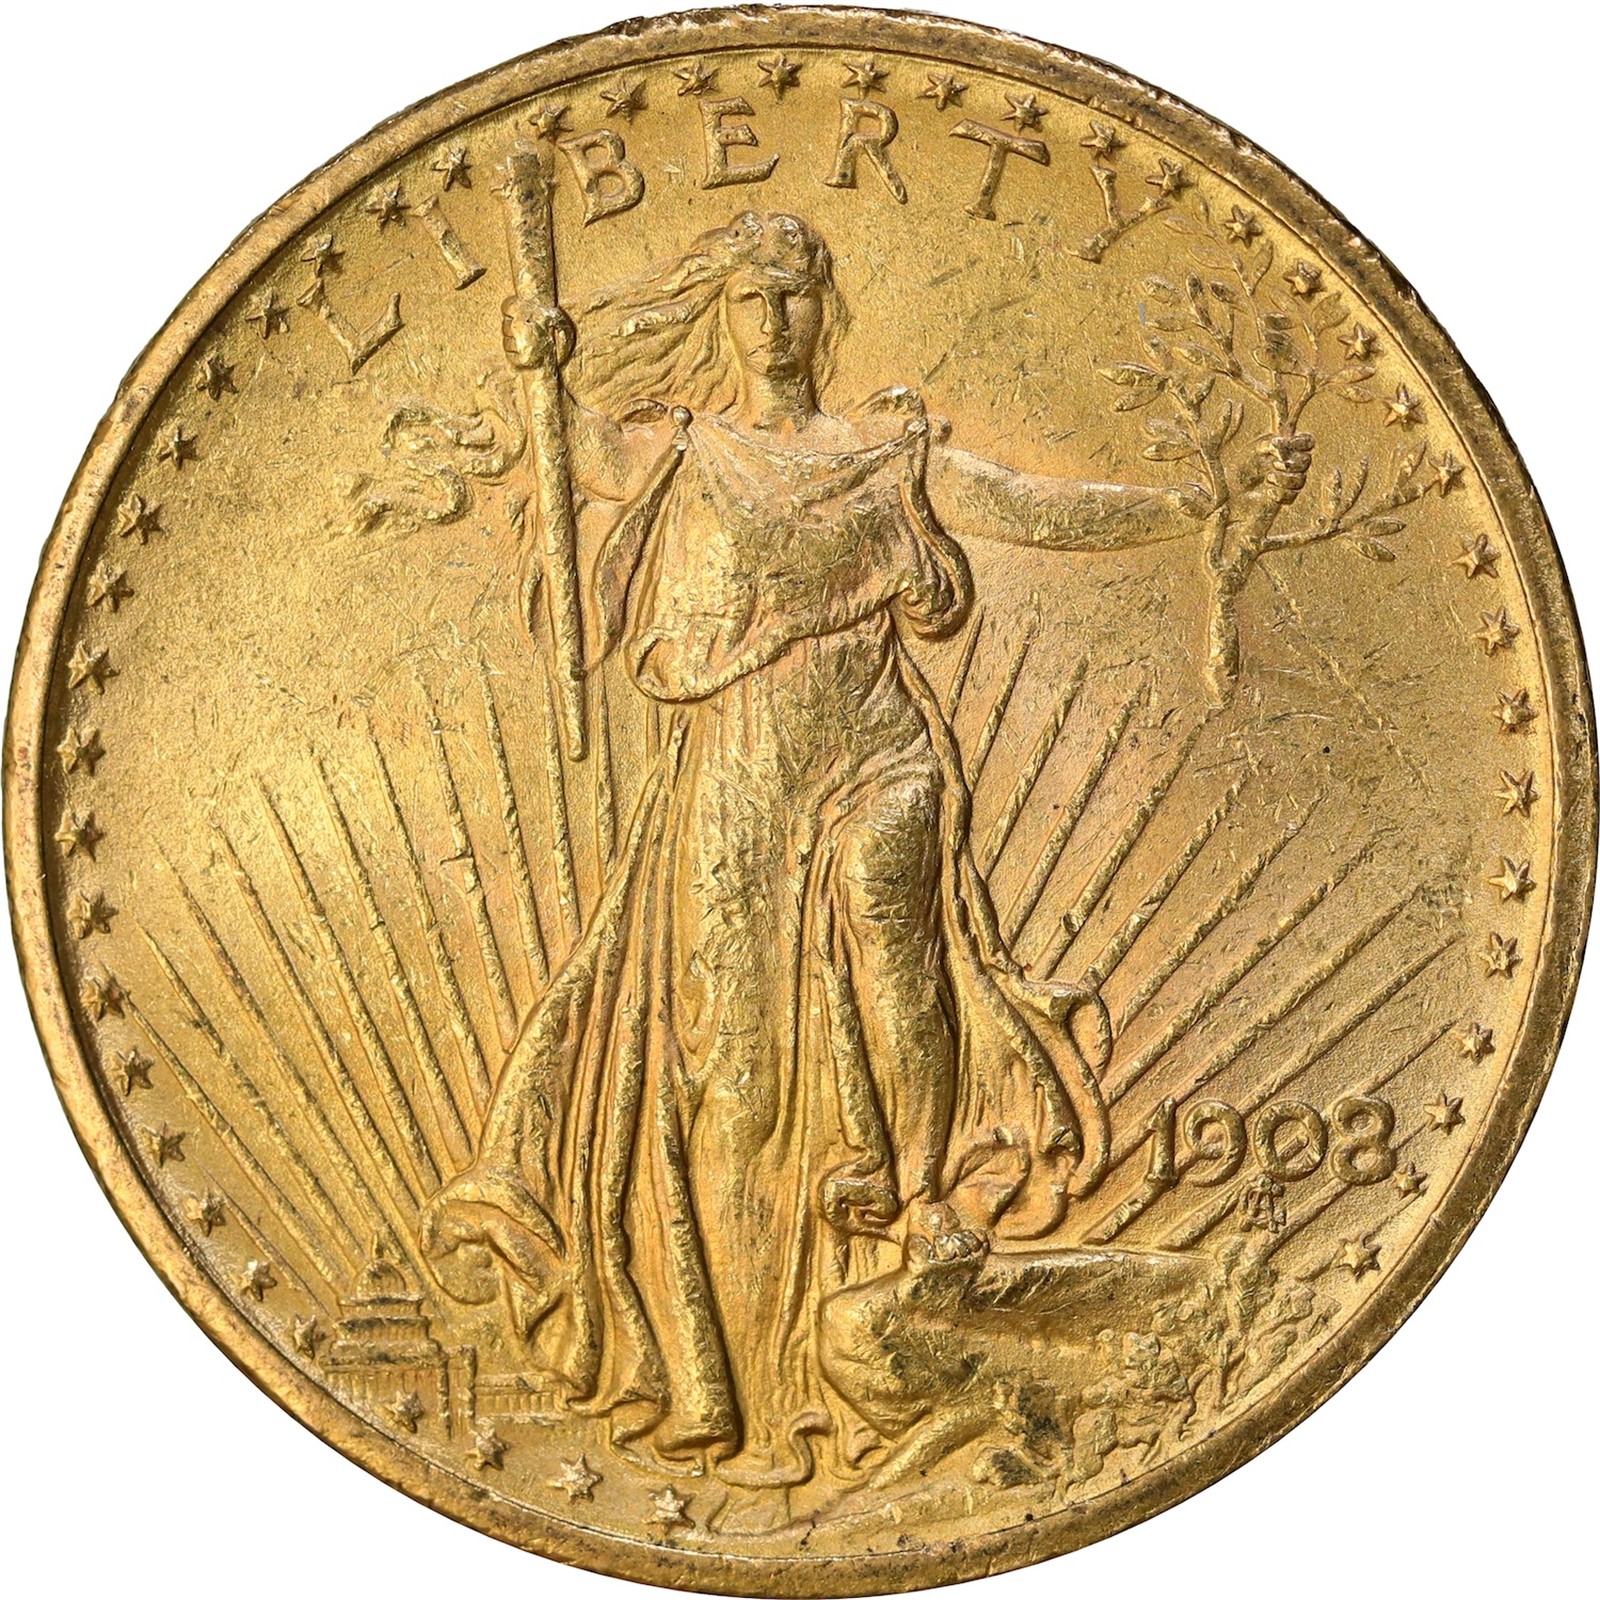 USA. St. Gaudens $20 1908 UNC